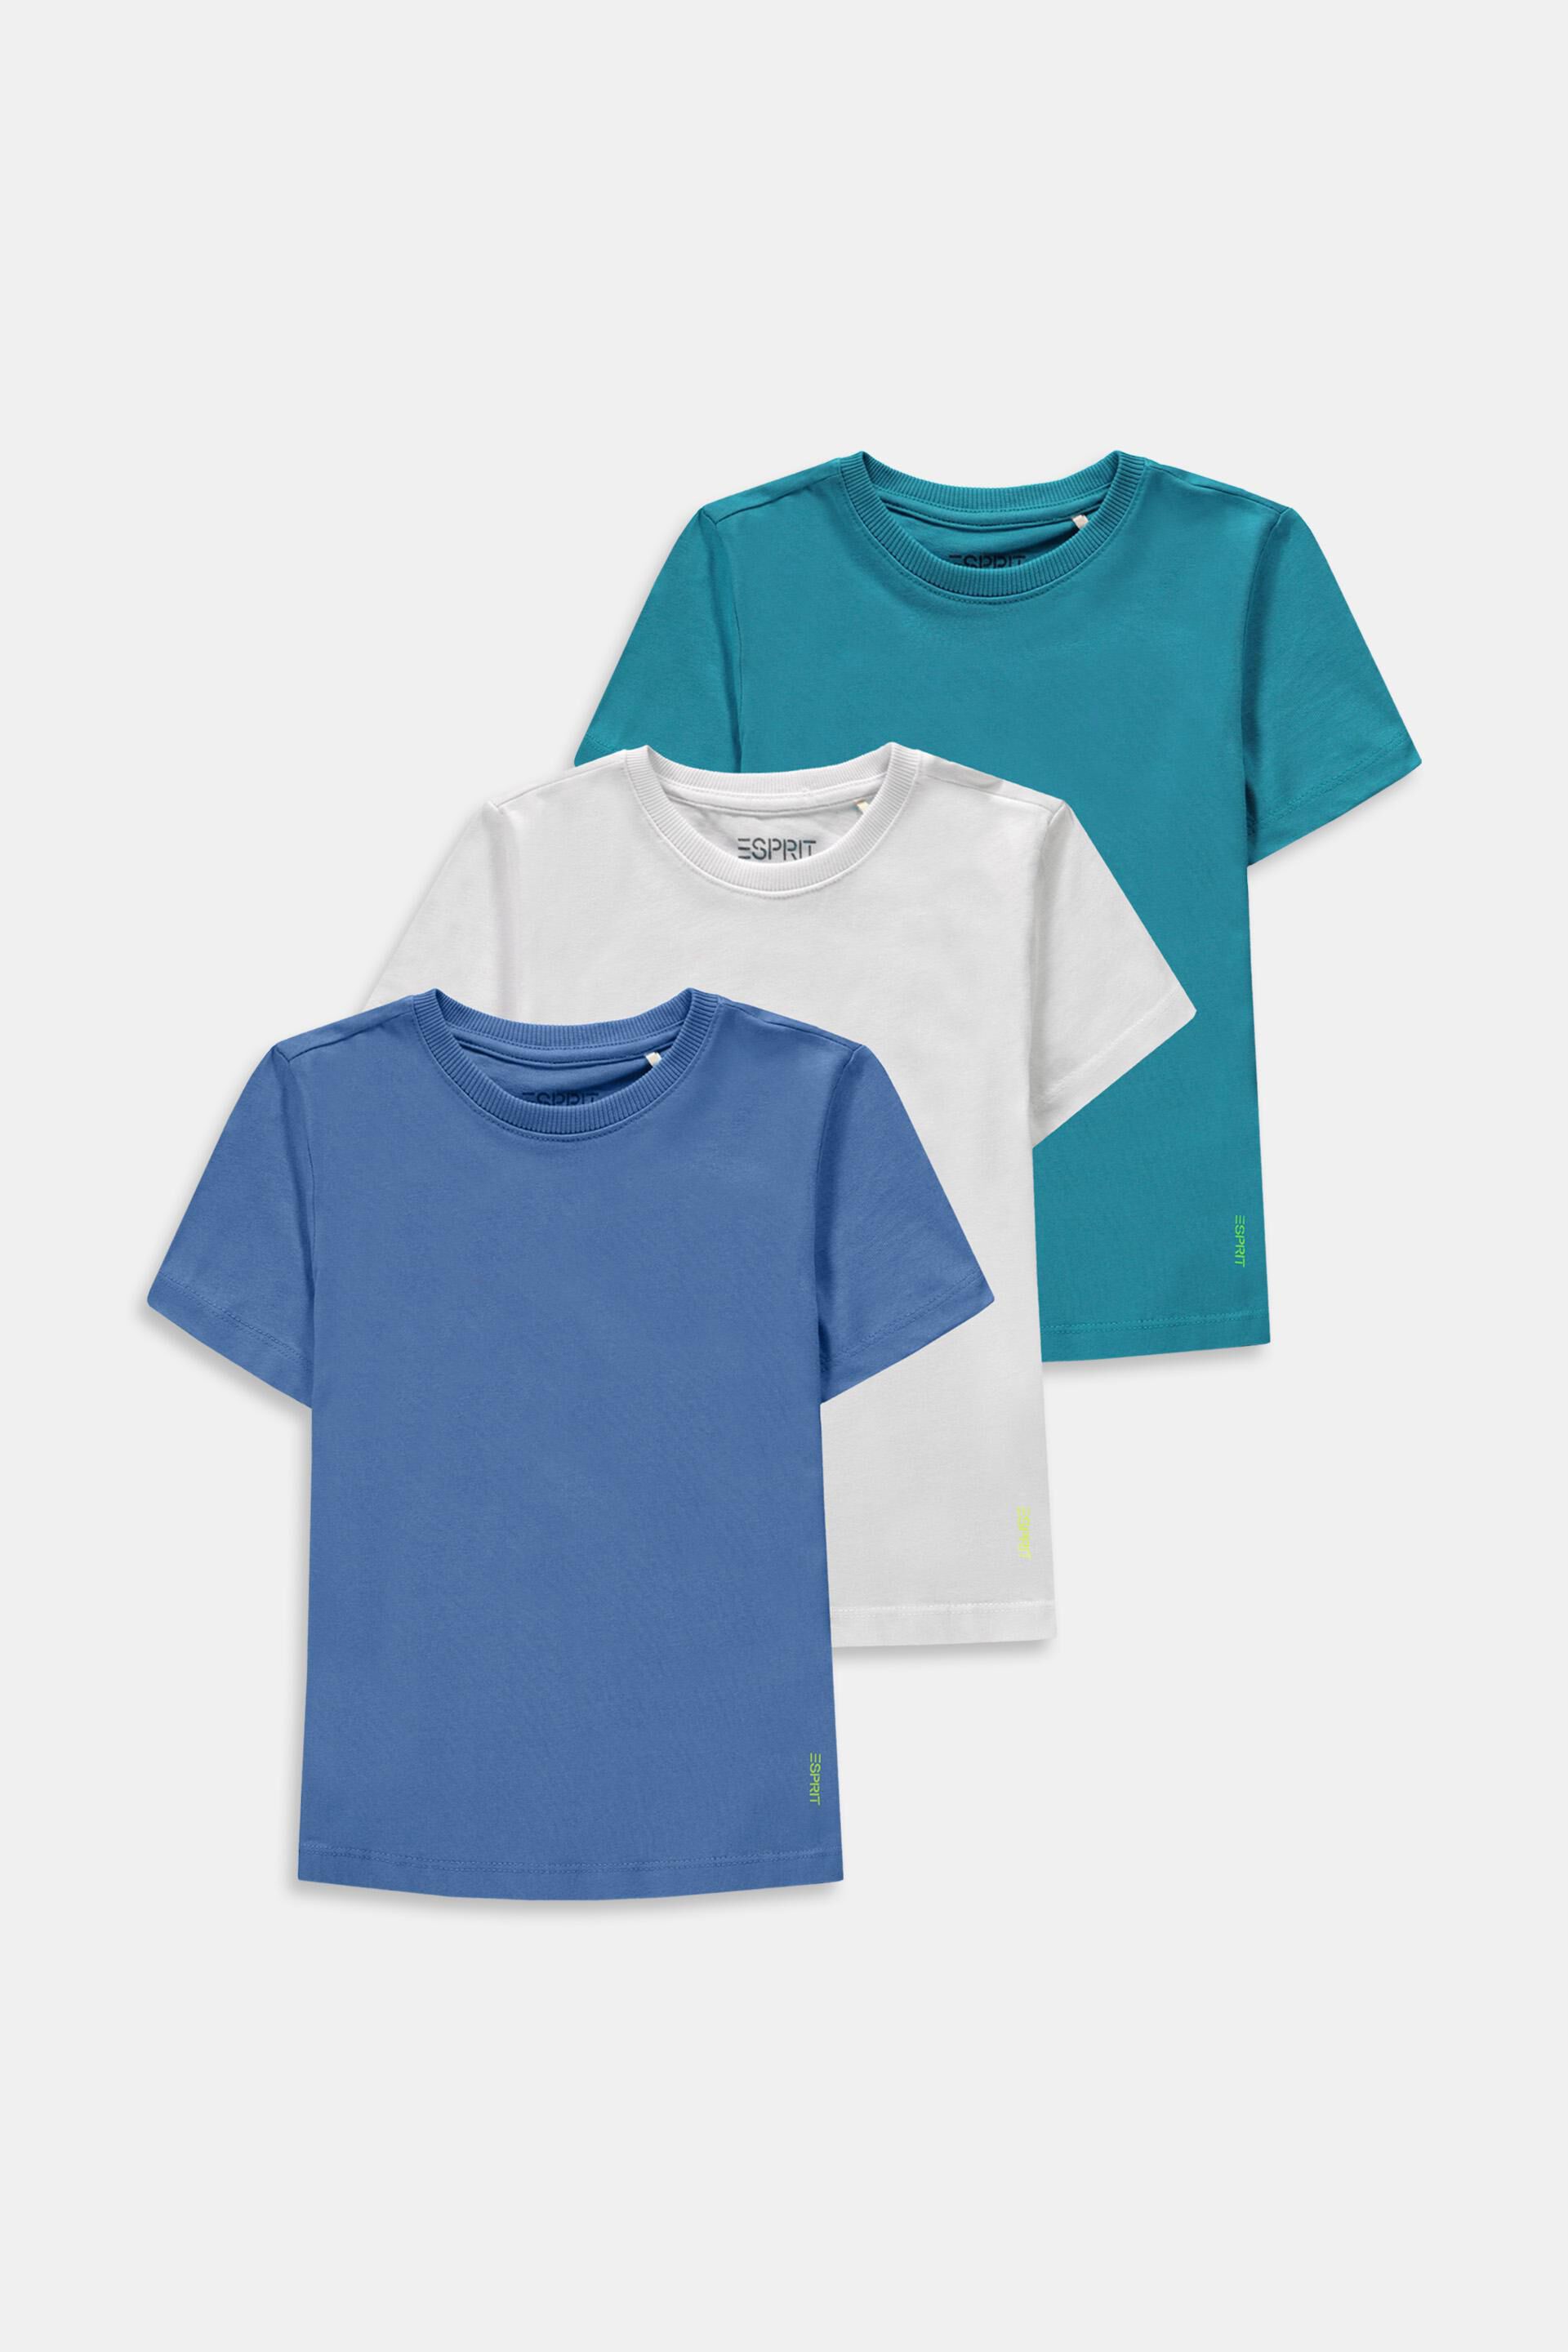 Esprit cotton of 3-pack t-shirts